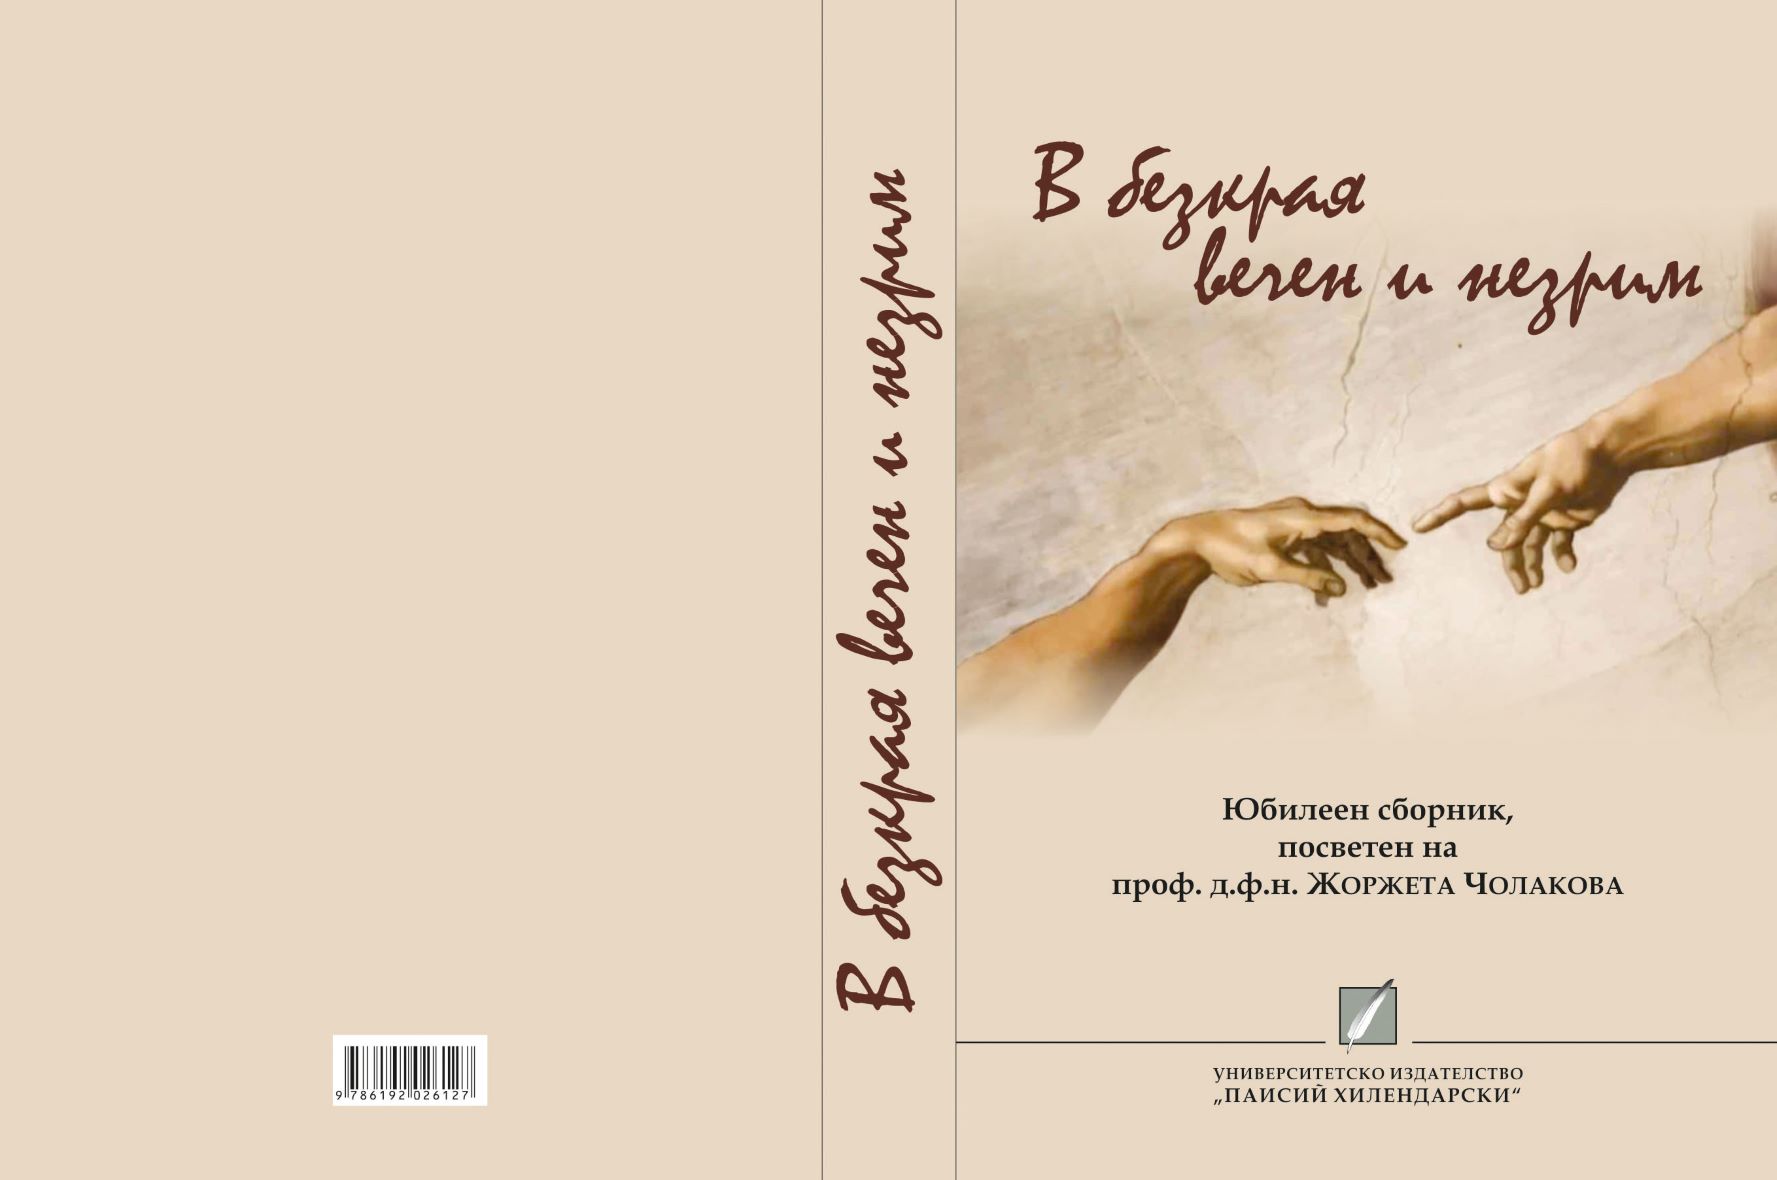 František Hrubín's Lyrical Drama Cover Image